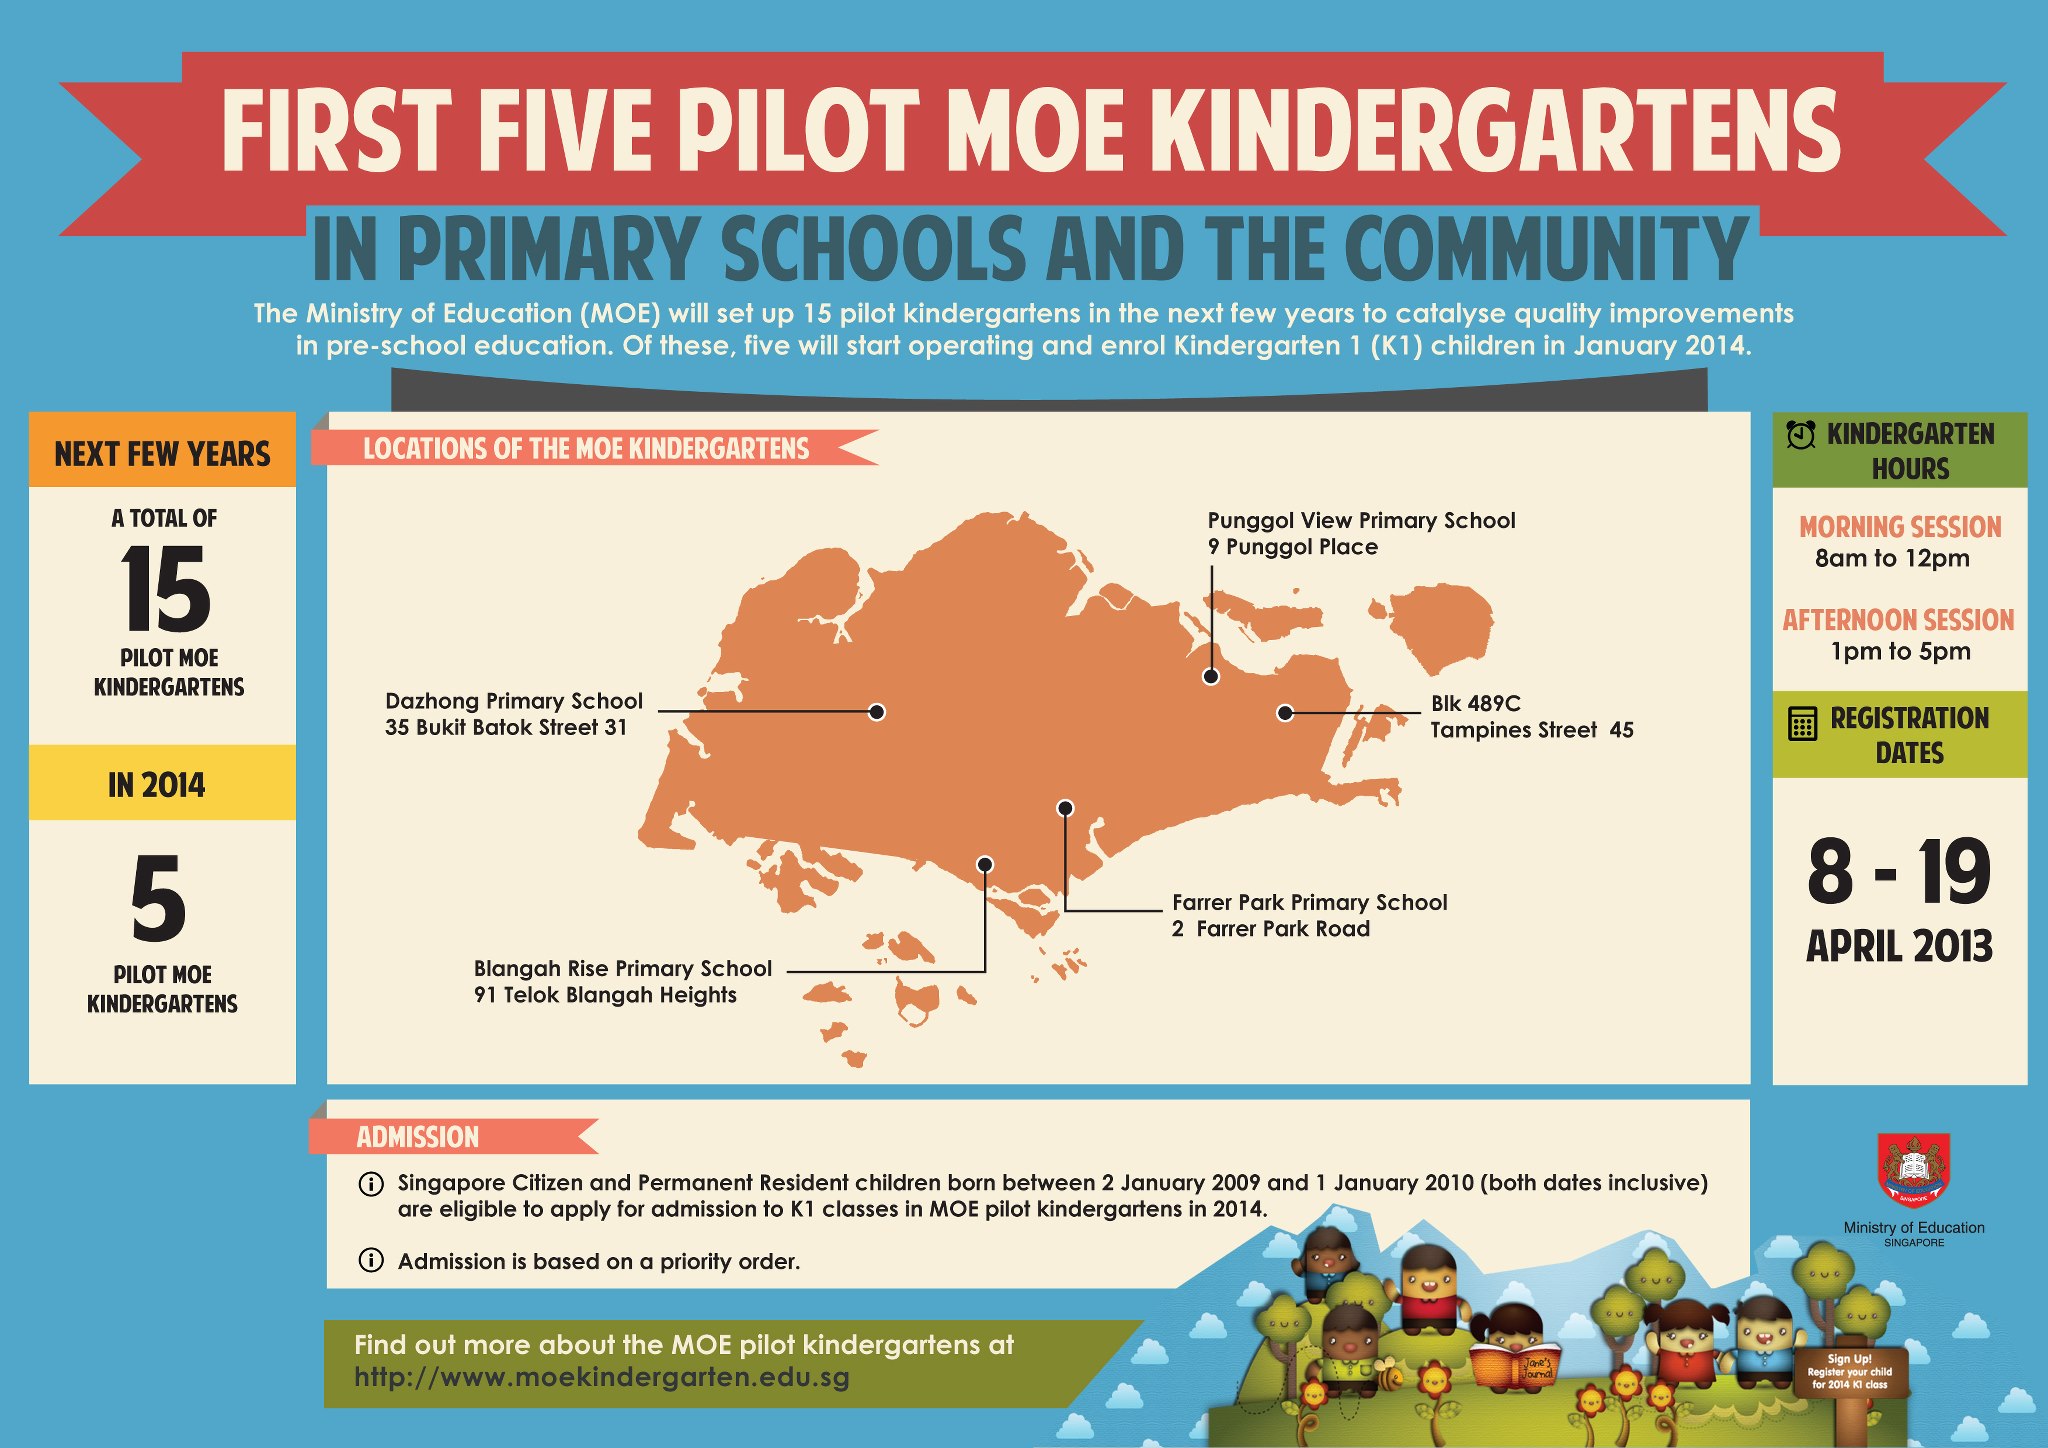 First Five Pilot MOE Kindergartens